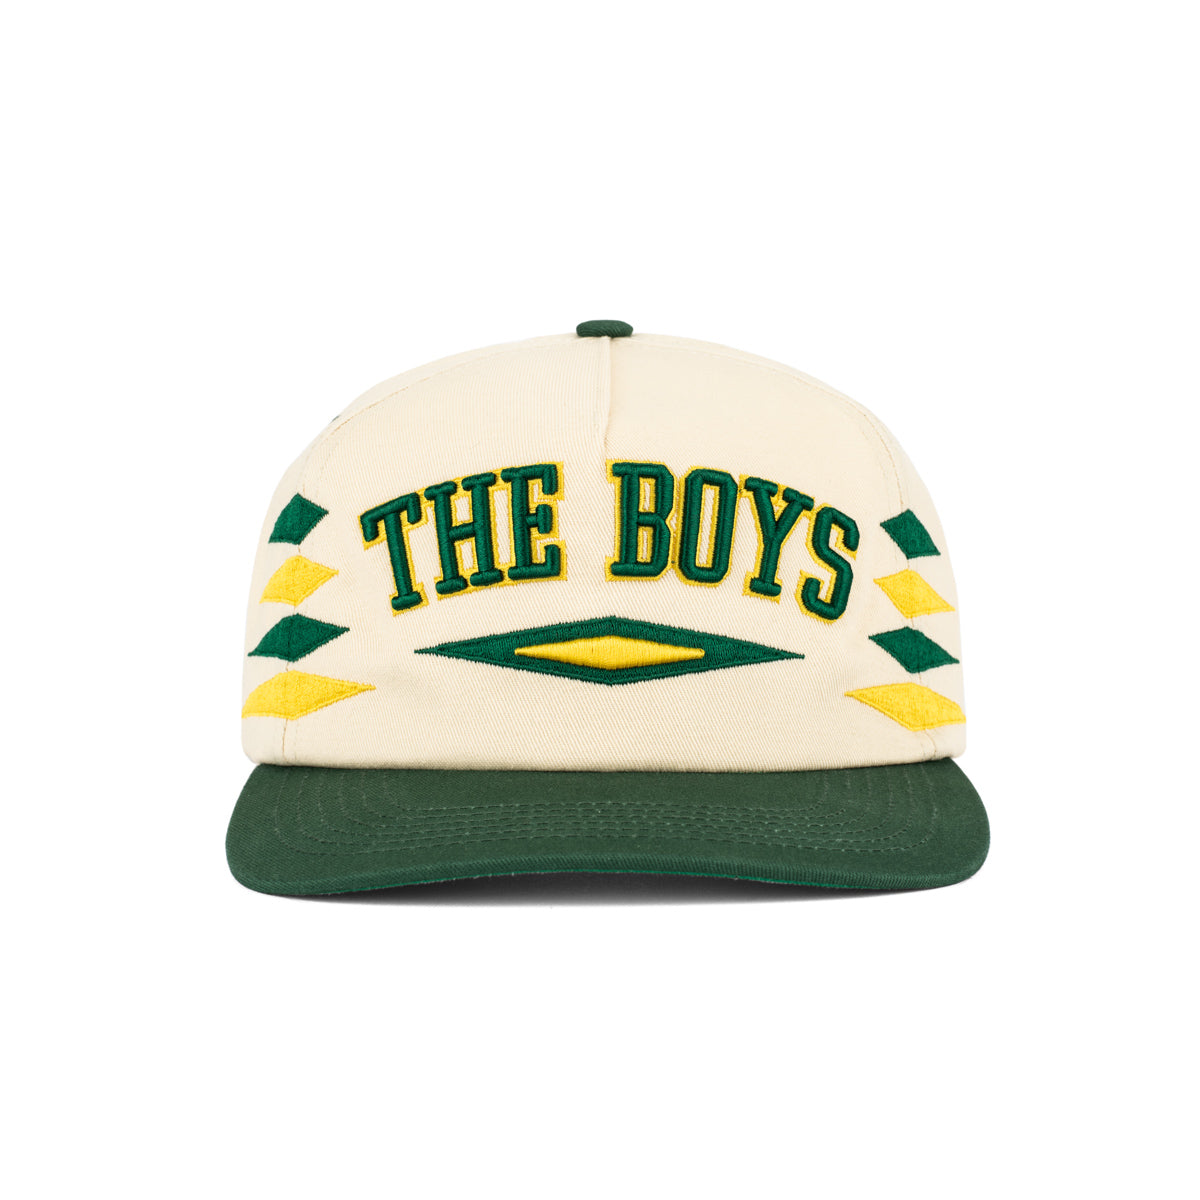 The Boys Diamond Retro Hat-Hats-Bussin With The Boys-Tan/Green-Barstool Sports